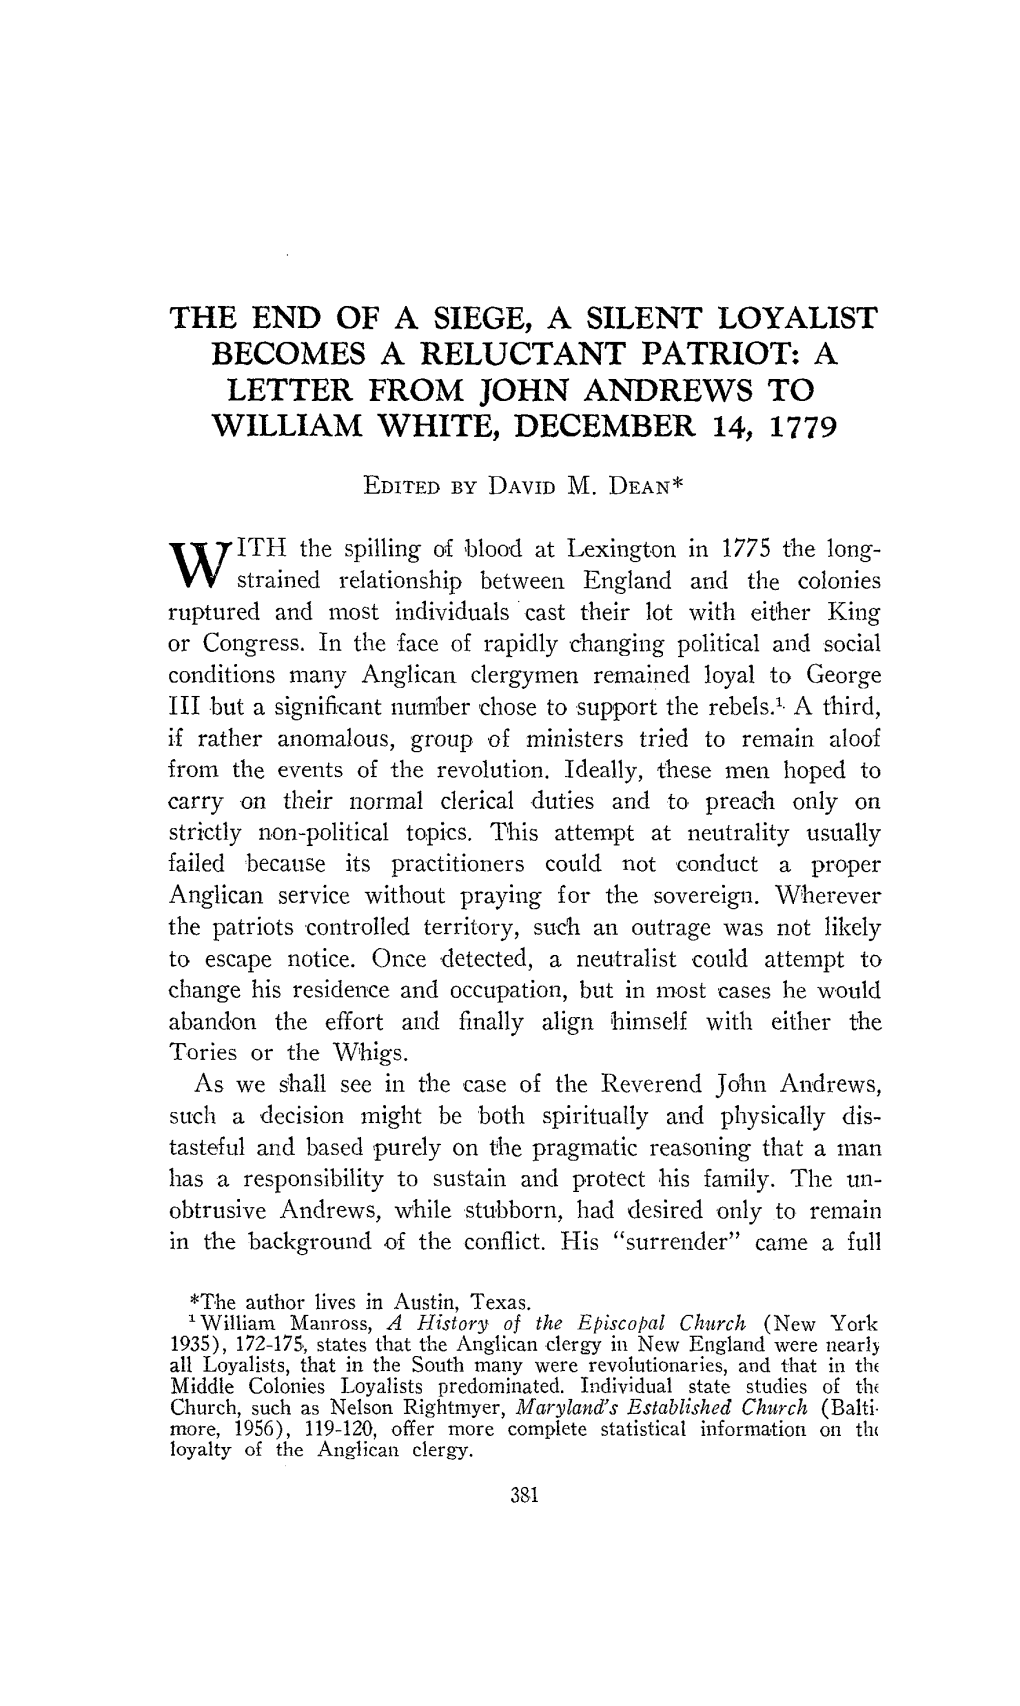 A Letter from John Andrews to William White, December 14, 1779